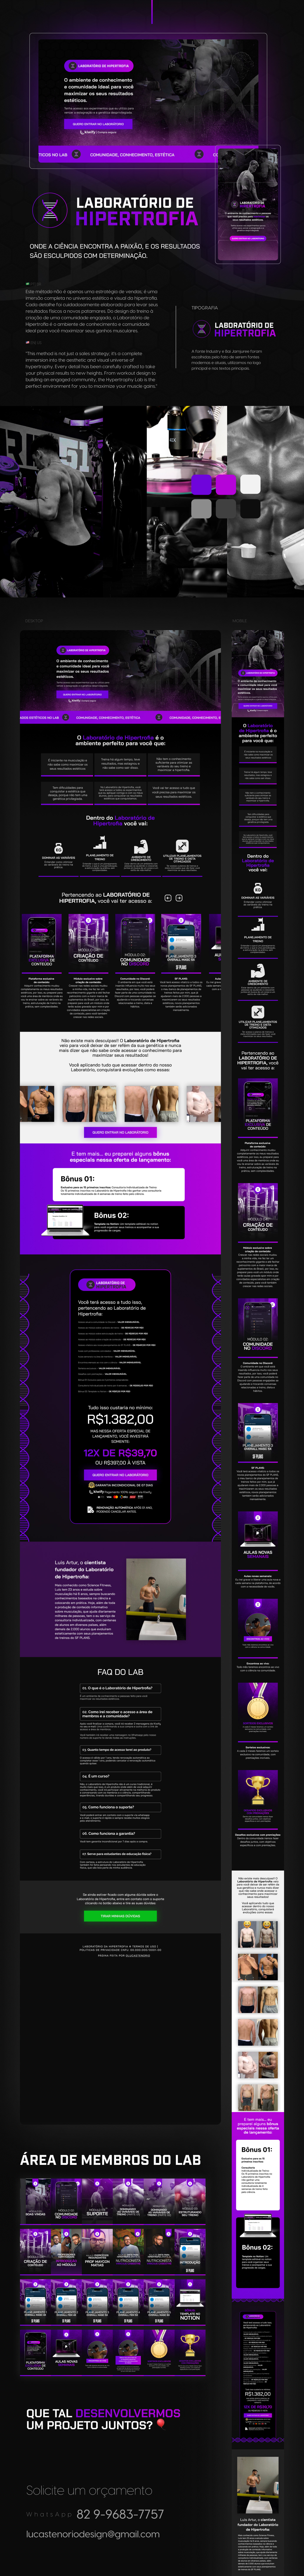 pagina de vendas landing page Web Design  Infoprodutor marketing digital design gráfico designer Social media post Graphic Designer marketing  